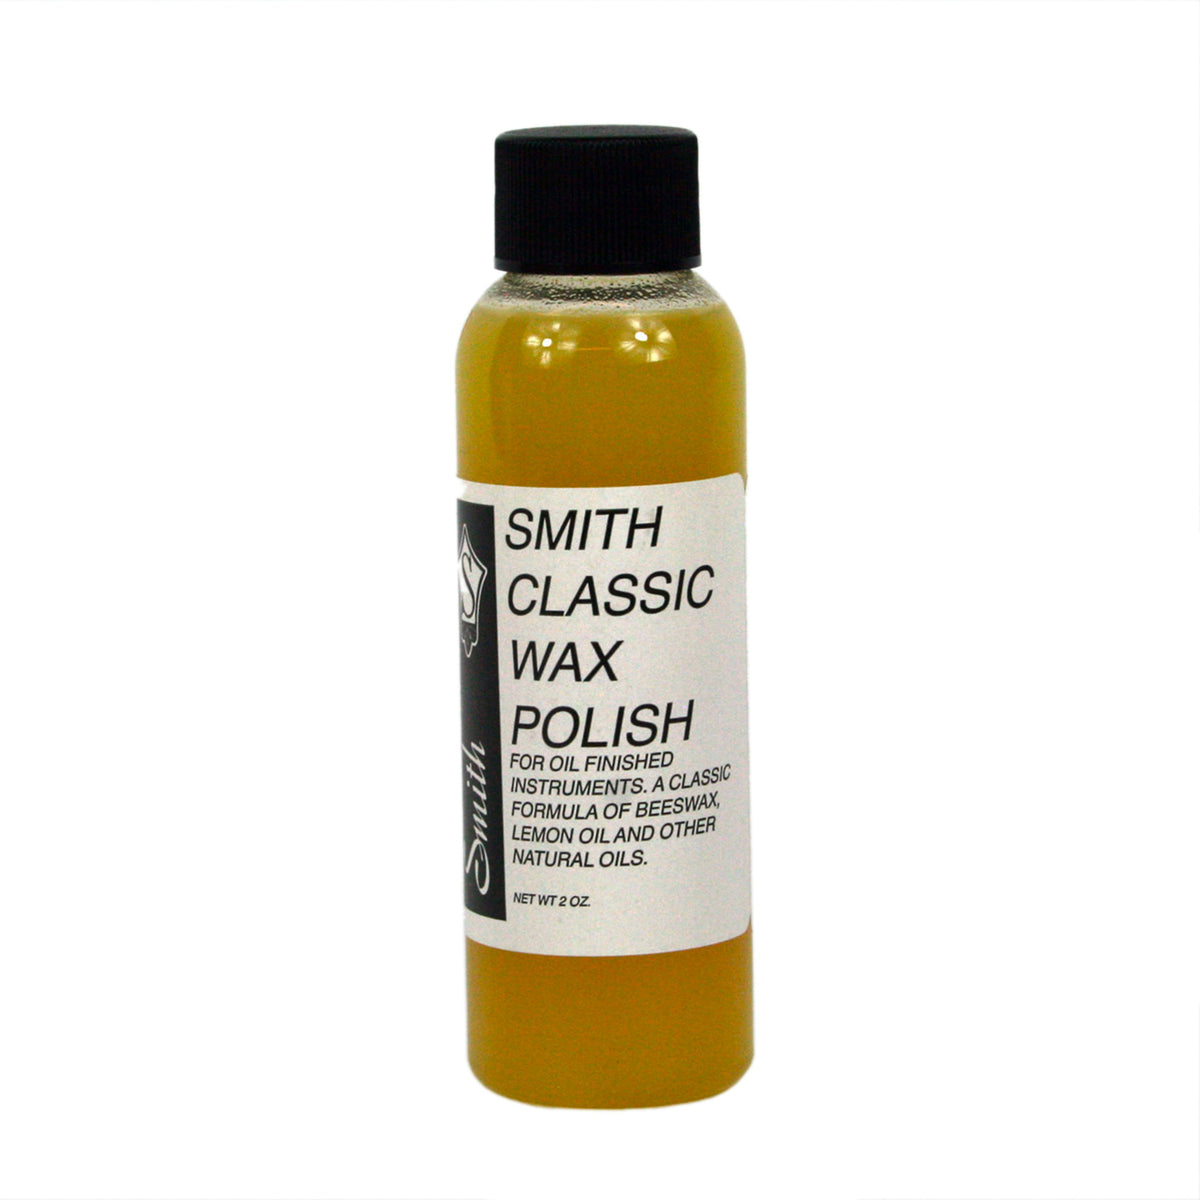 Smith Classic Wax Polish